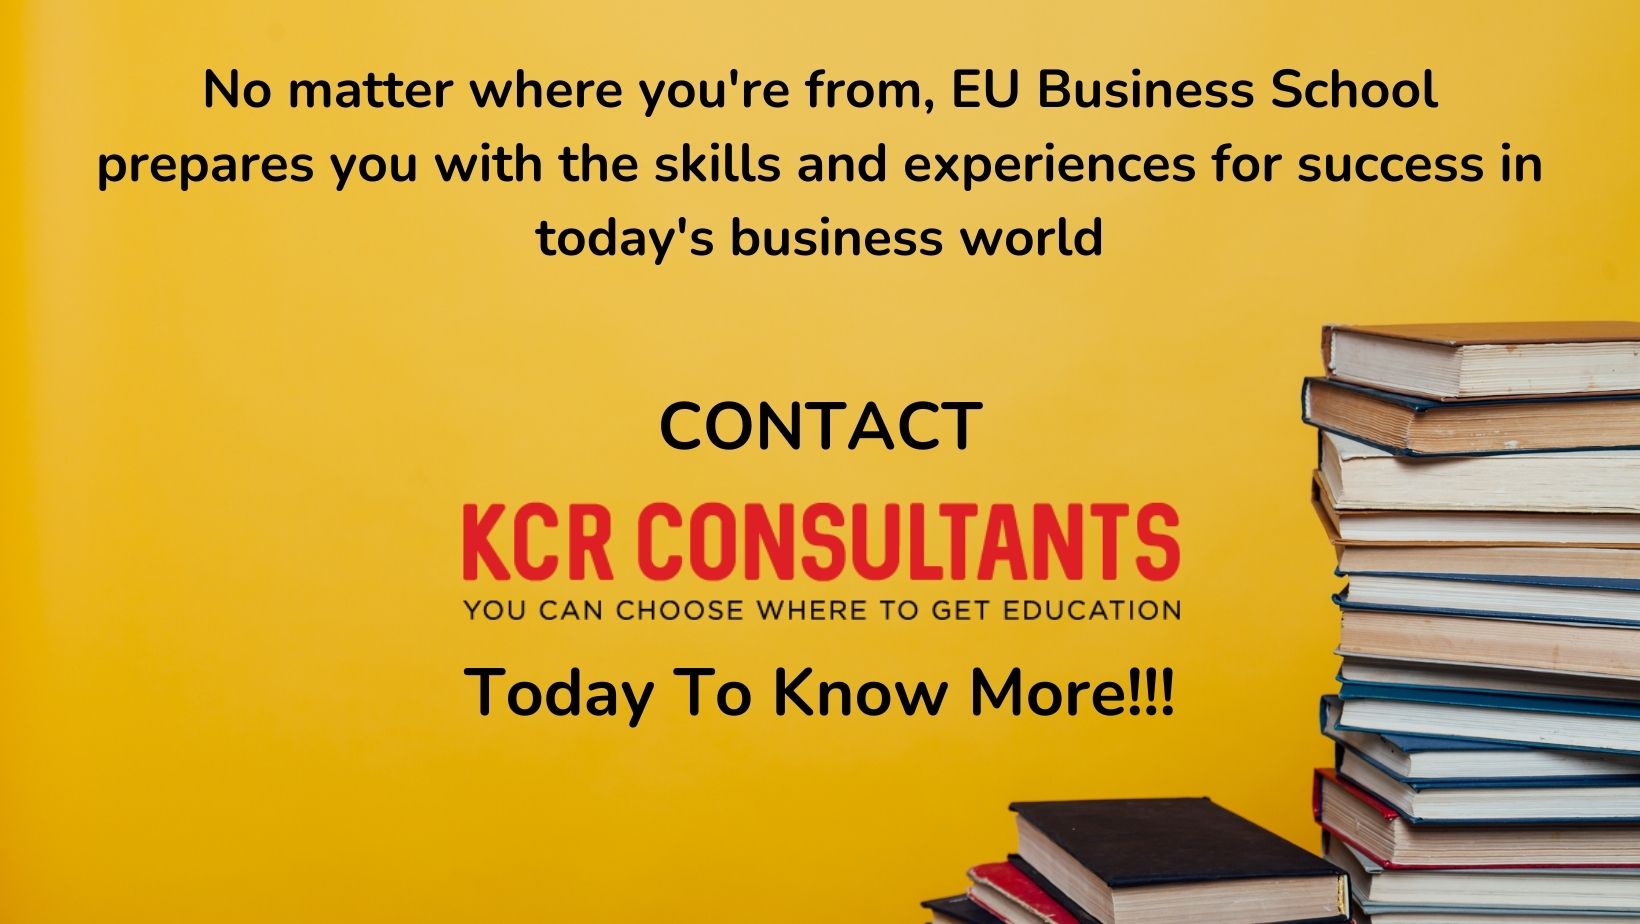 EU Business School - KCR CONSULTANTS - Contact us